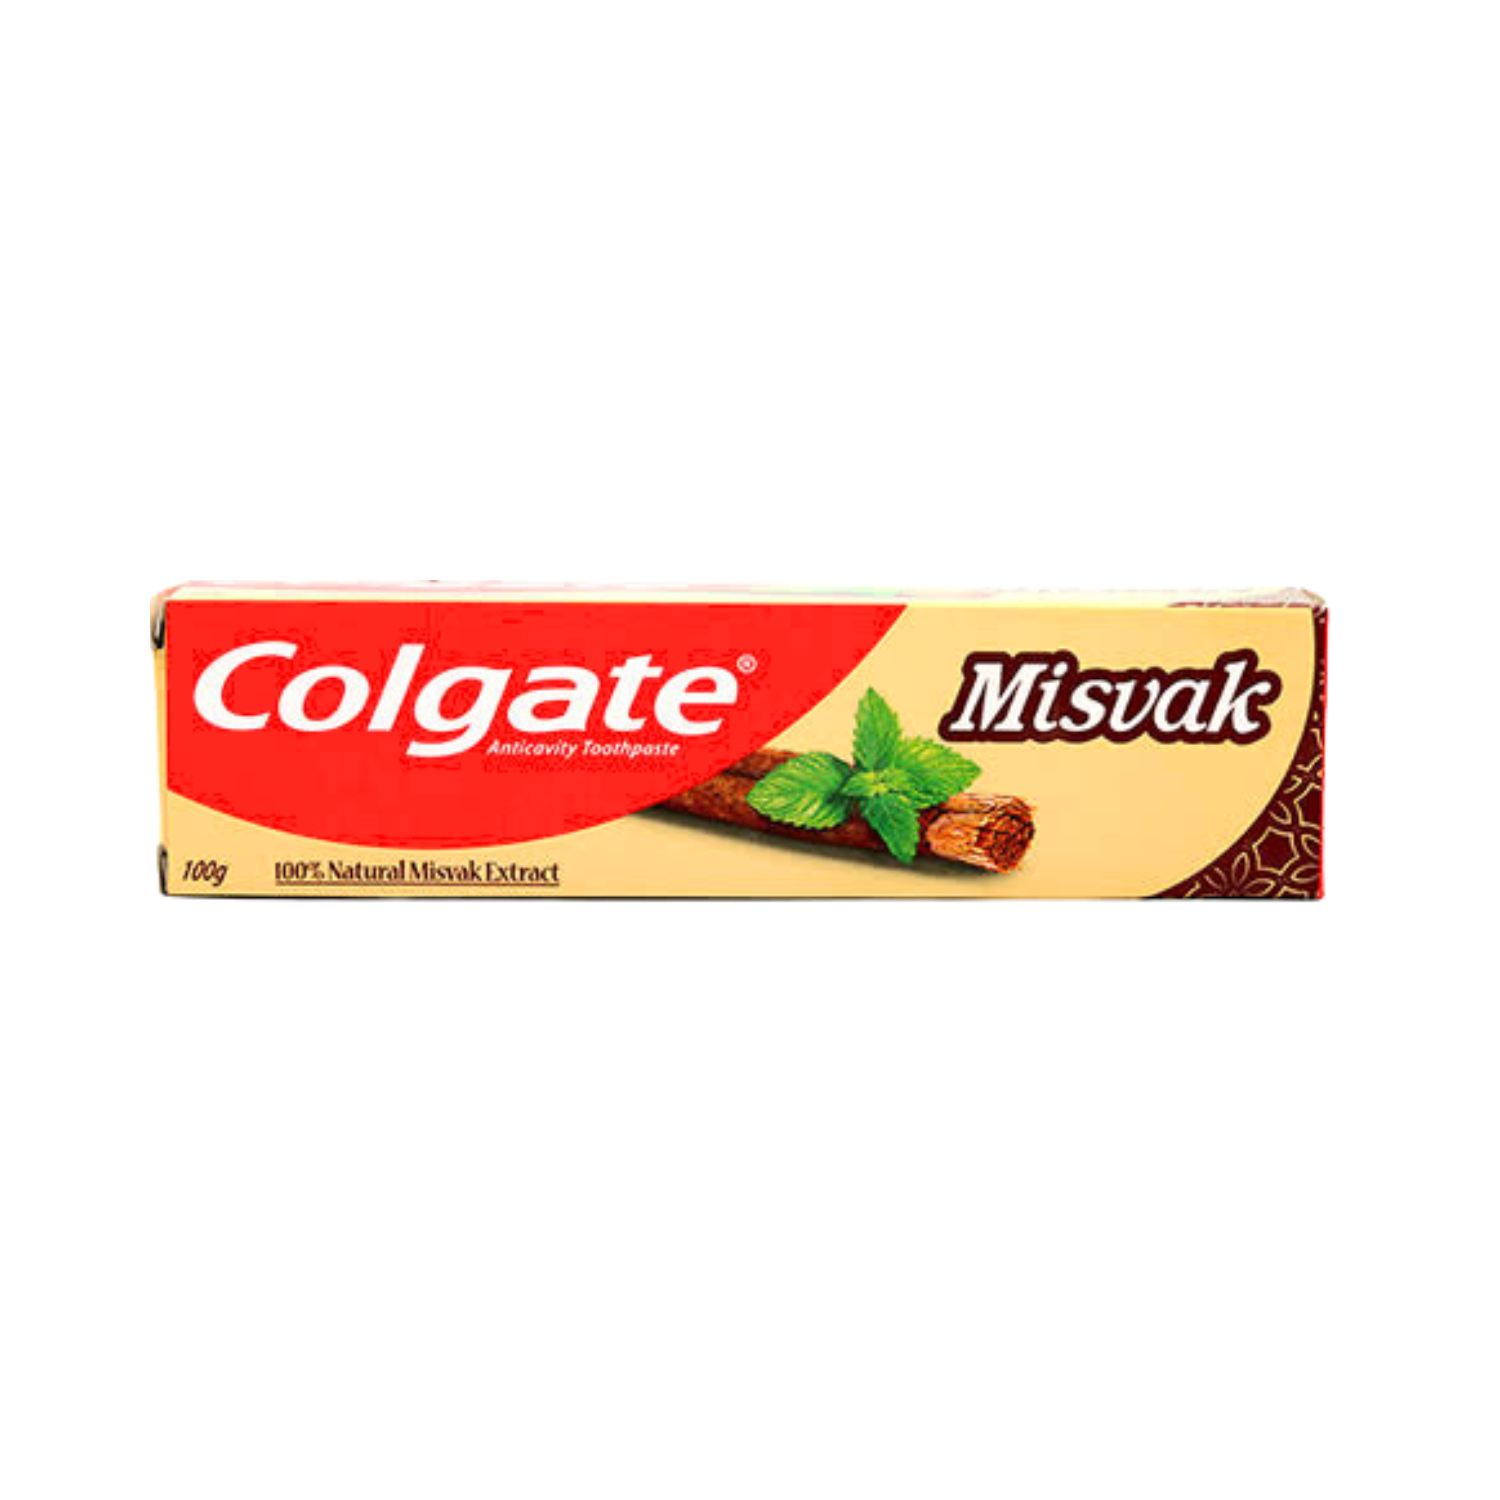 colgate-misvak-extract-toothpaste-100g